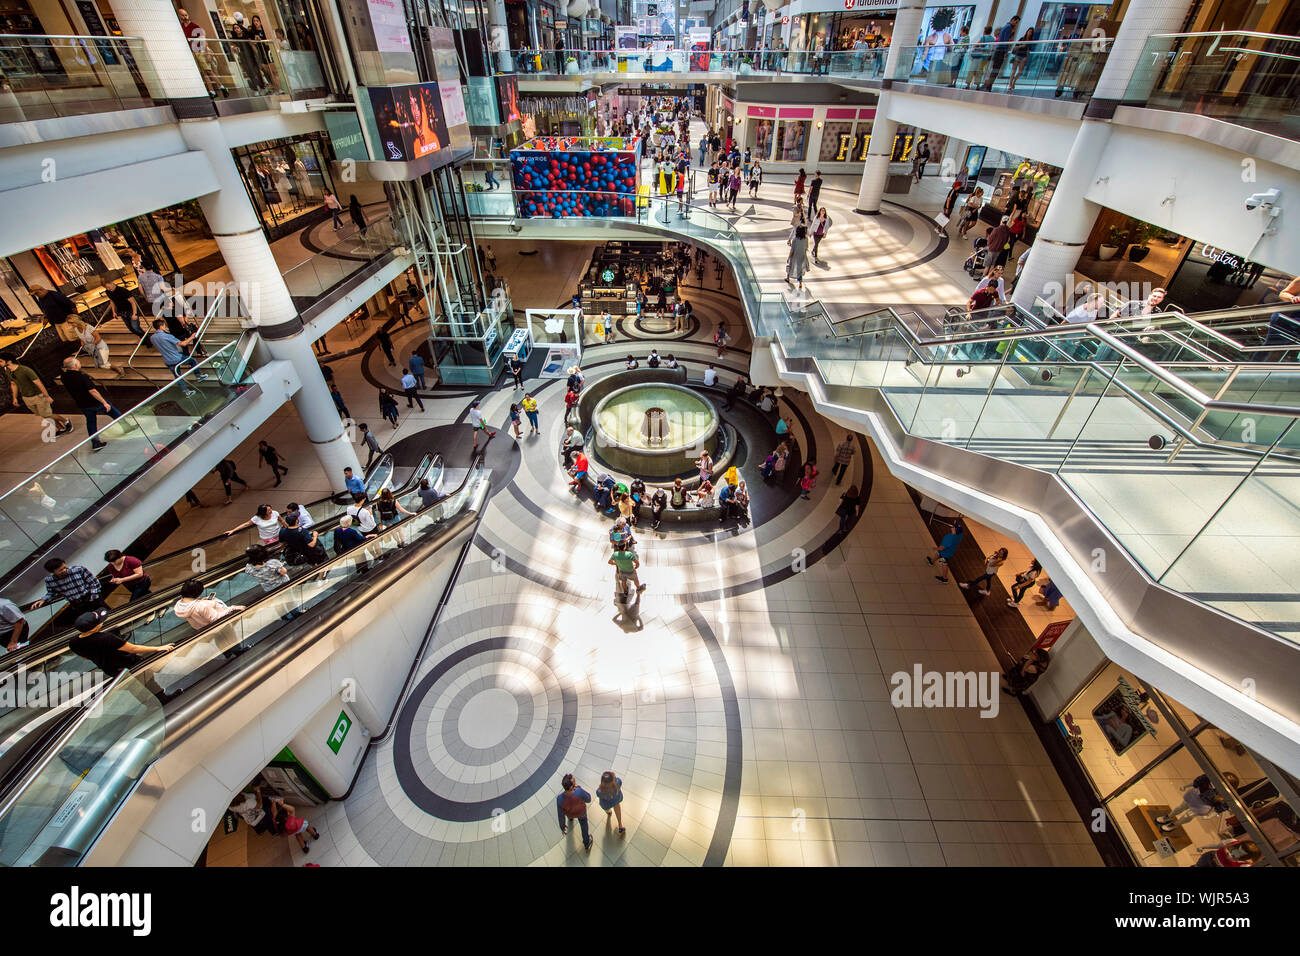 Eaton Centre shopping mall Stock Photo - Alamy